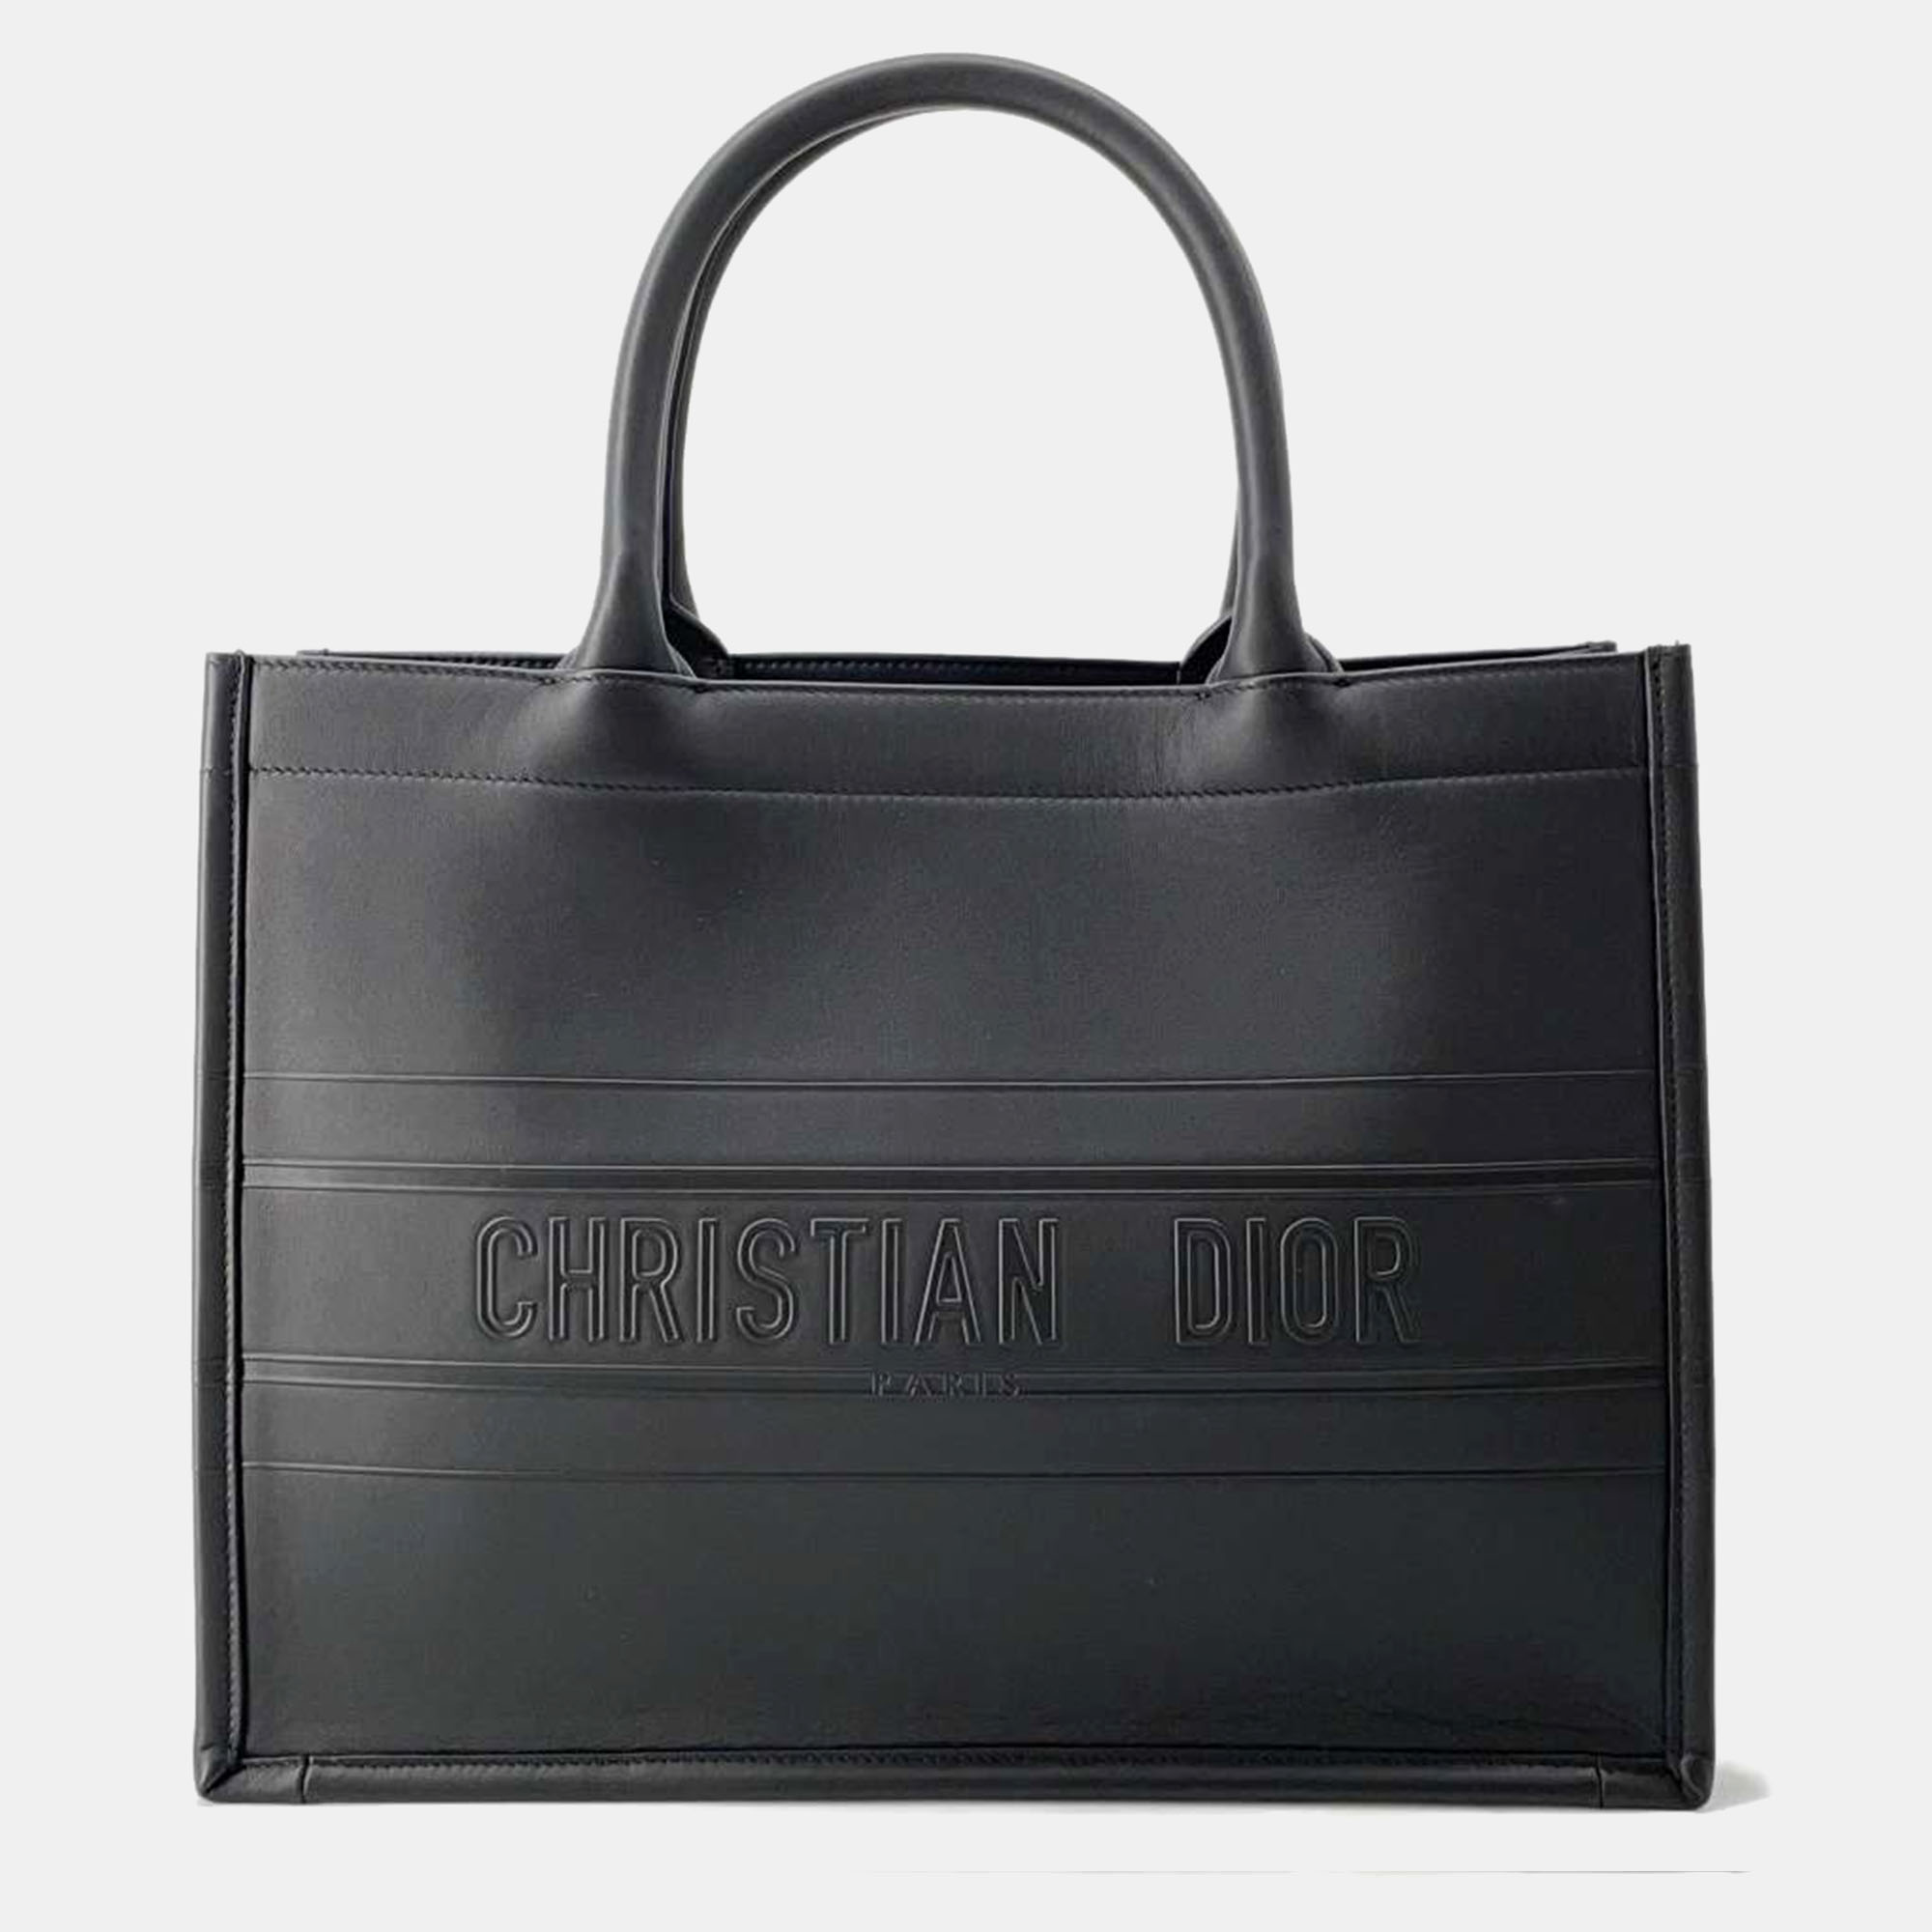 Dior black leather book tote medium bag